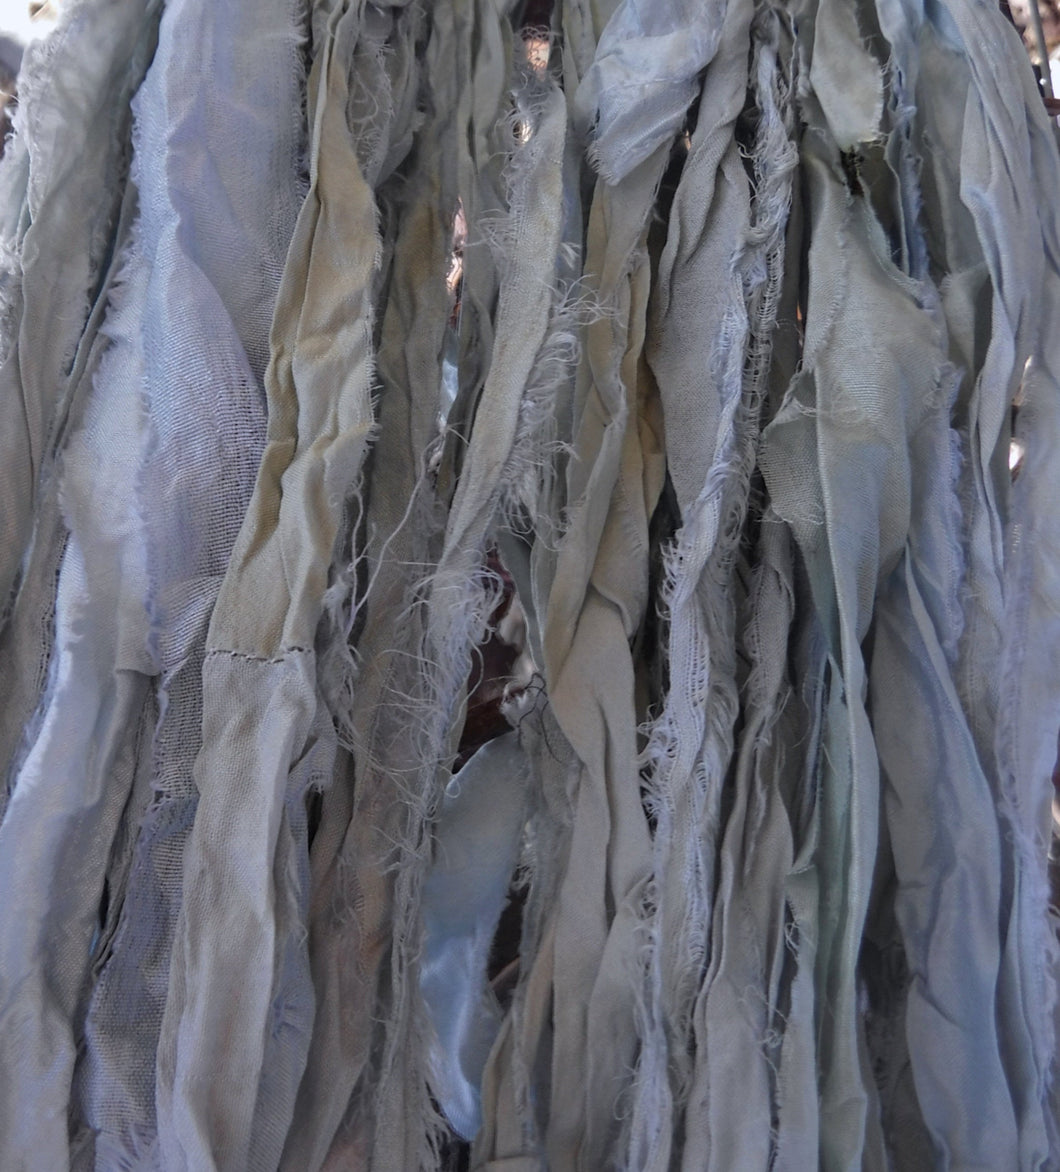 Deja Blue Powder Blue Recycled Sari Silk Thin Ribbon Yarn 5 - 10 Yards or Full Skein for Jewelry Weaving Spinning & Mixed Media